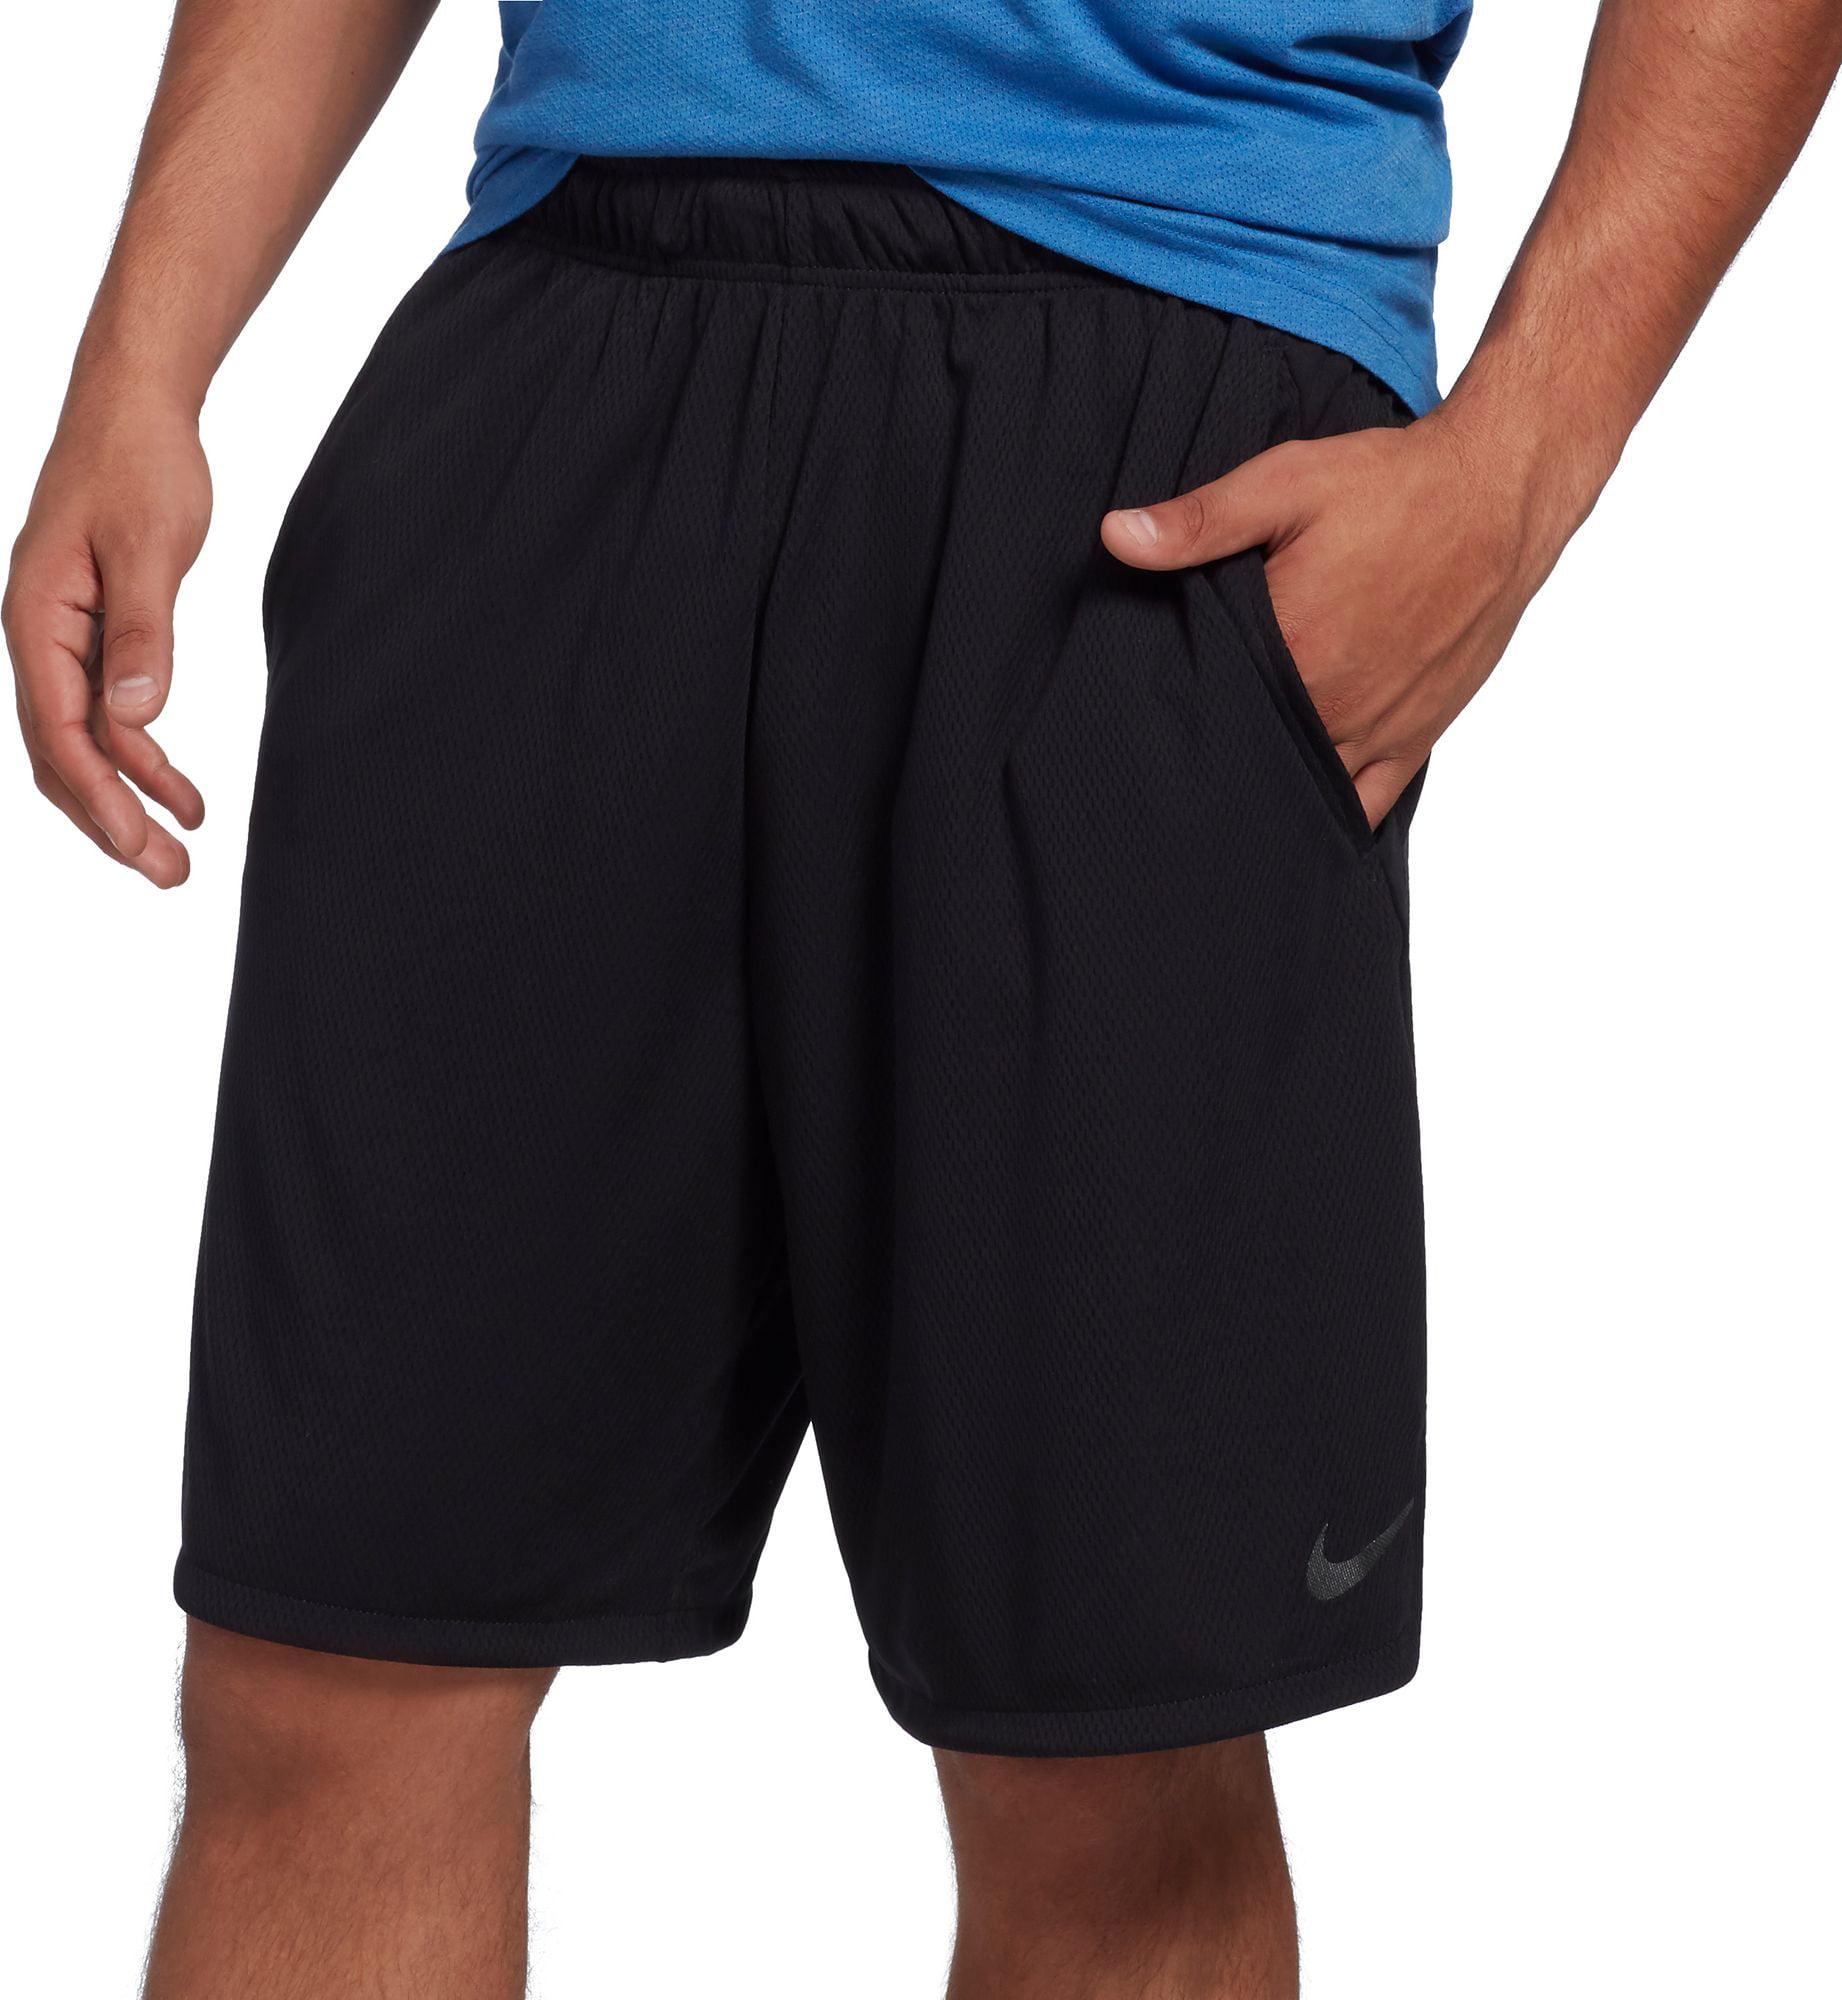 Nike Men's Dry 4.0 Shorts Walmart.com